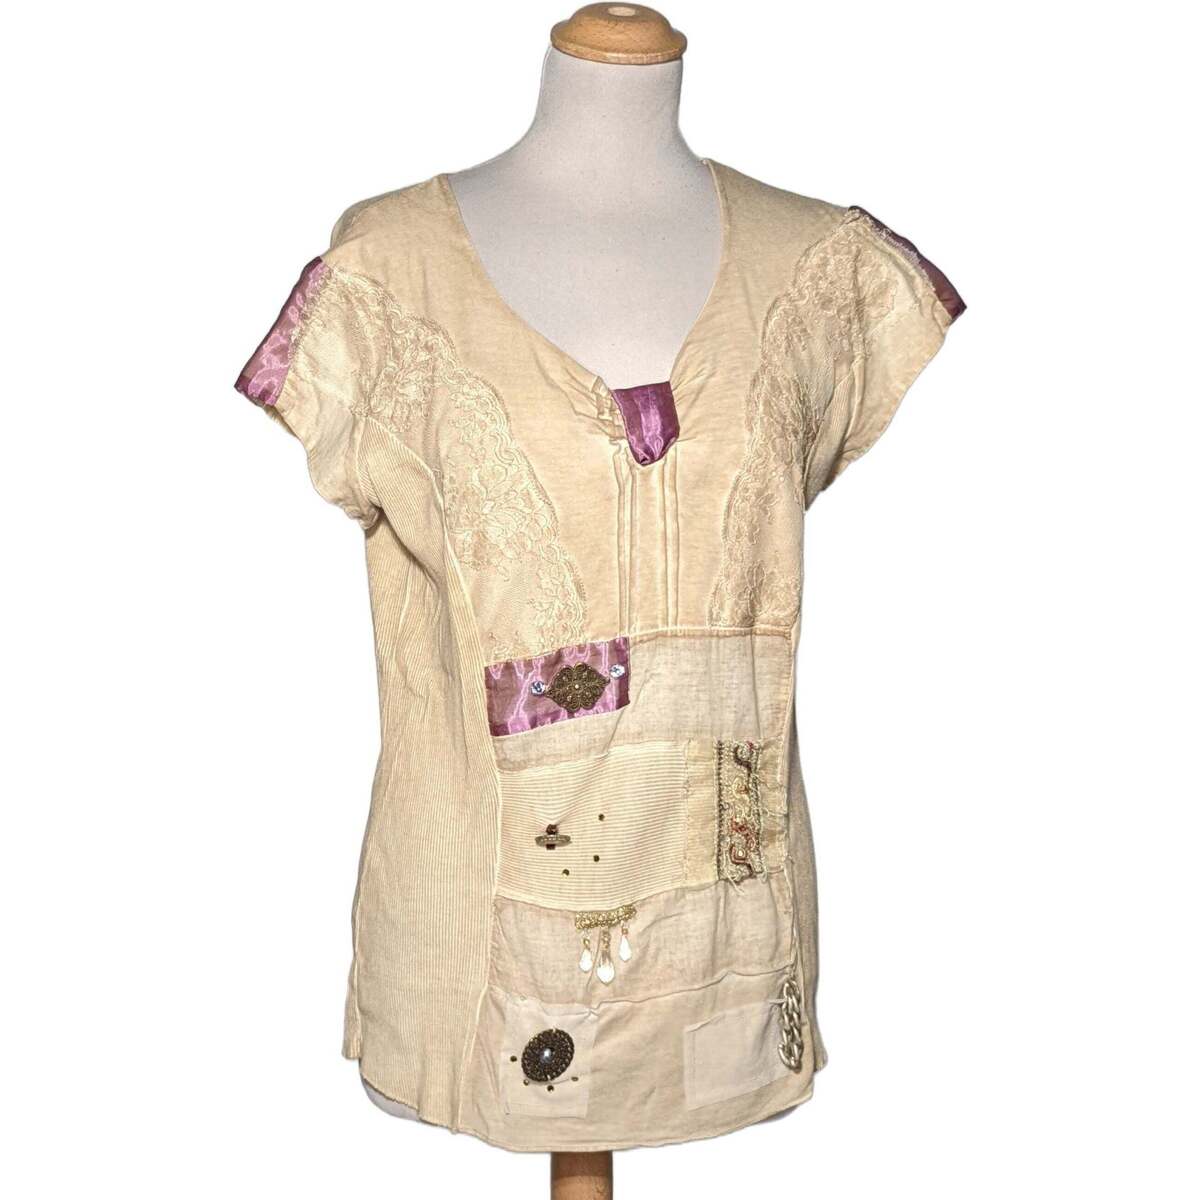 Vêtements Femme durban micro check shirt item 40 - T3 - L Marron